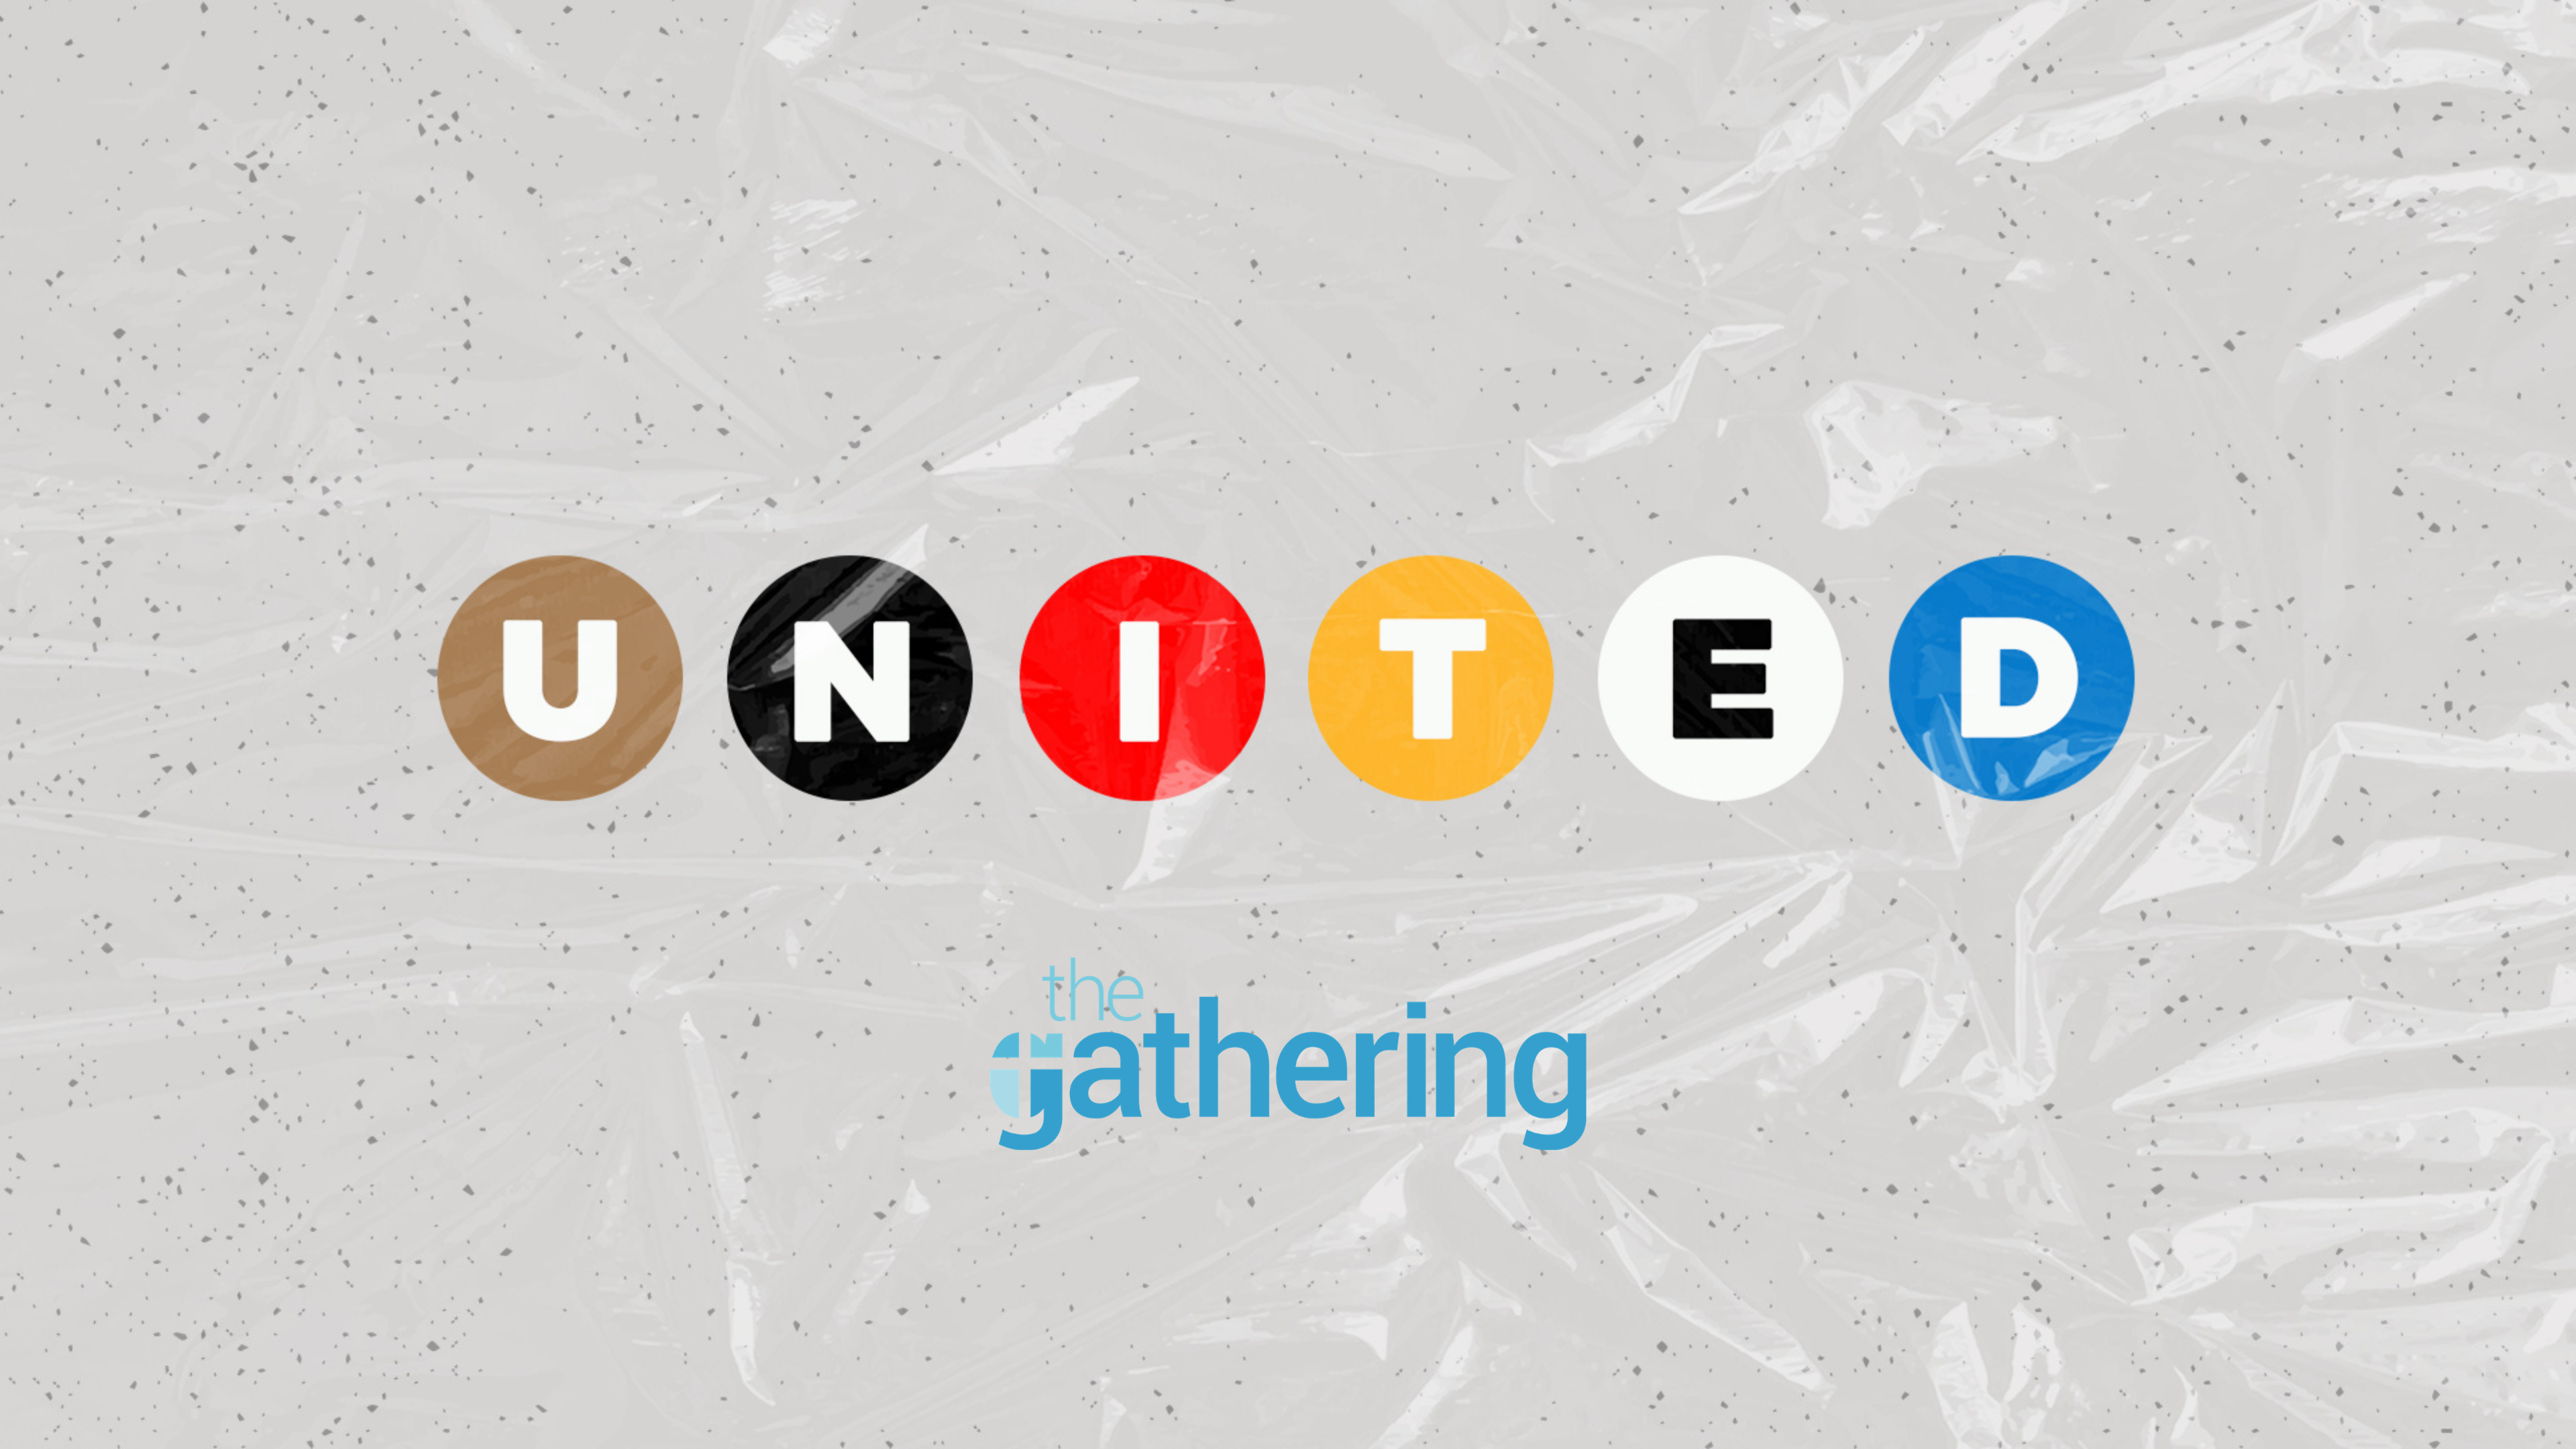 UNITED: Characteristics That Unite (Peacemaking)